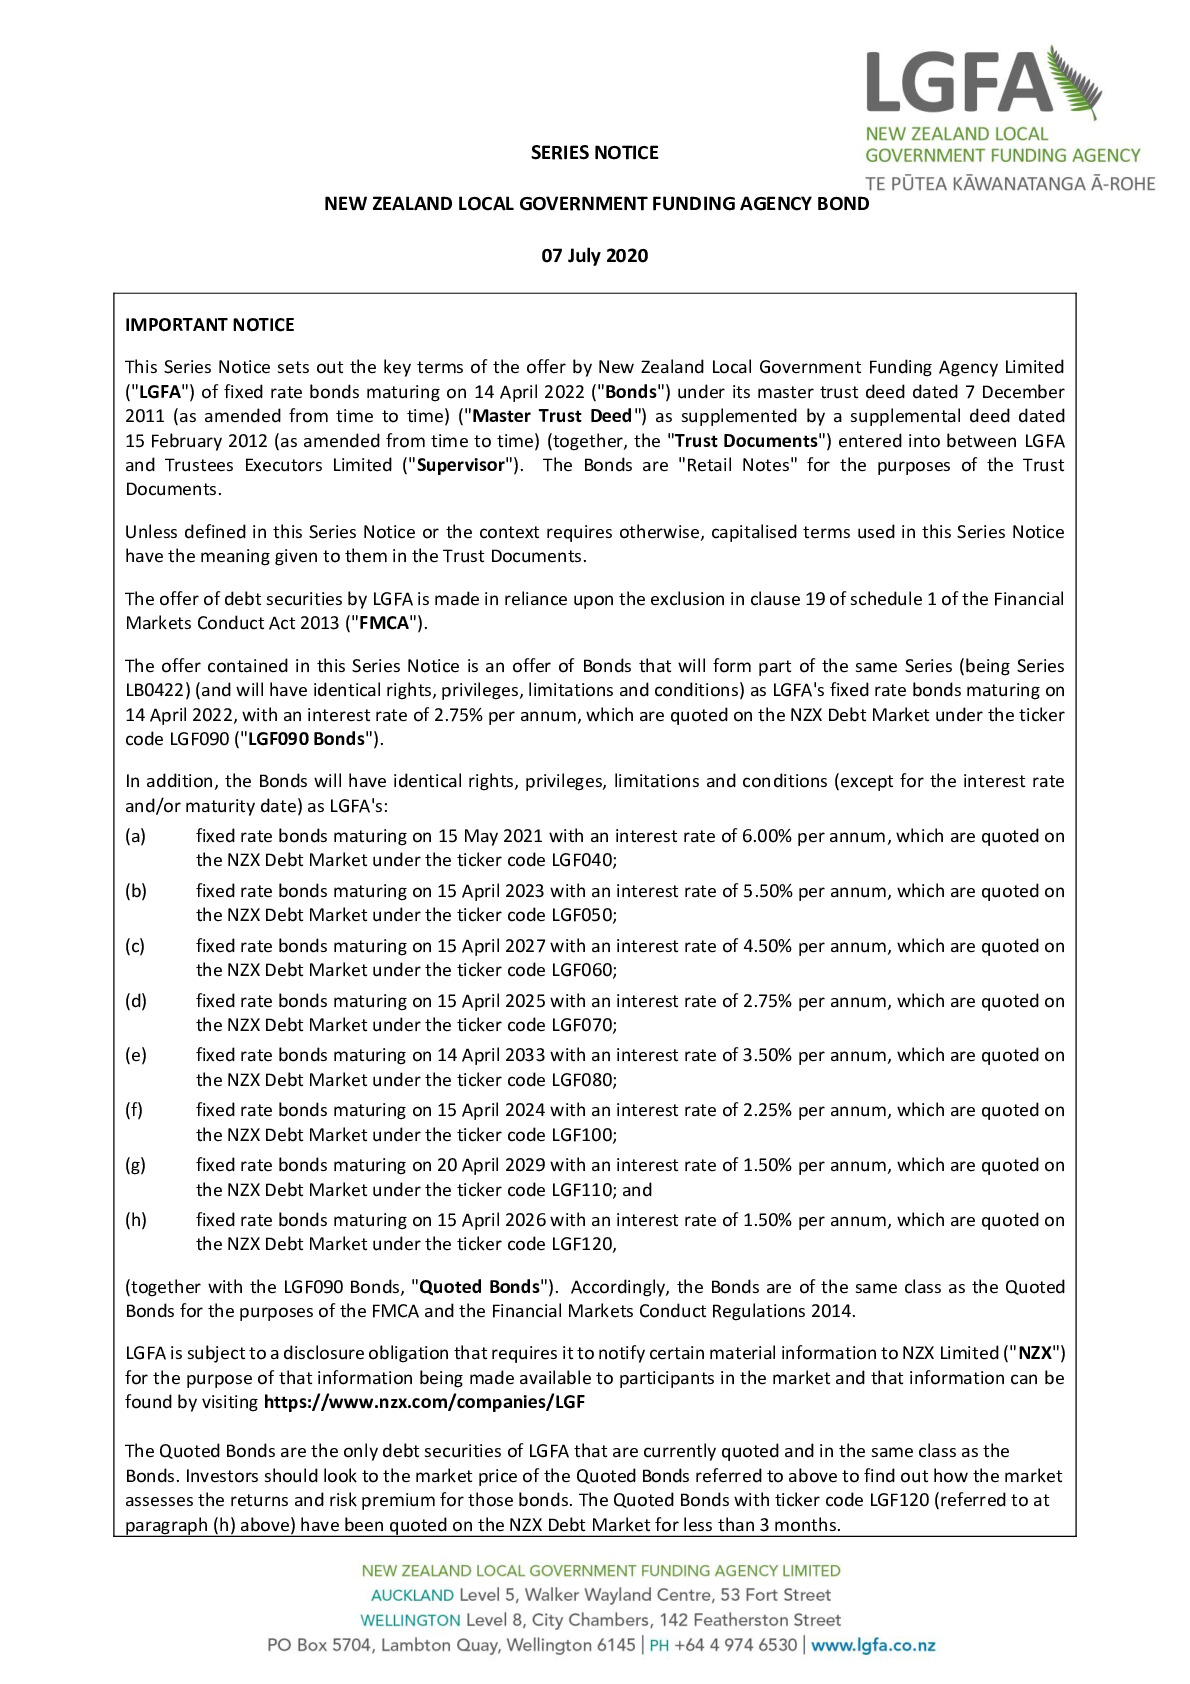 LGFA Series Notice Template 14 Apr 2022 - QFP Tap of Existing Series